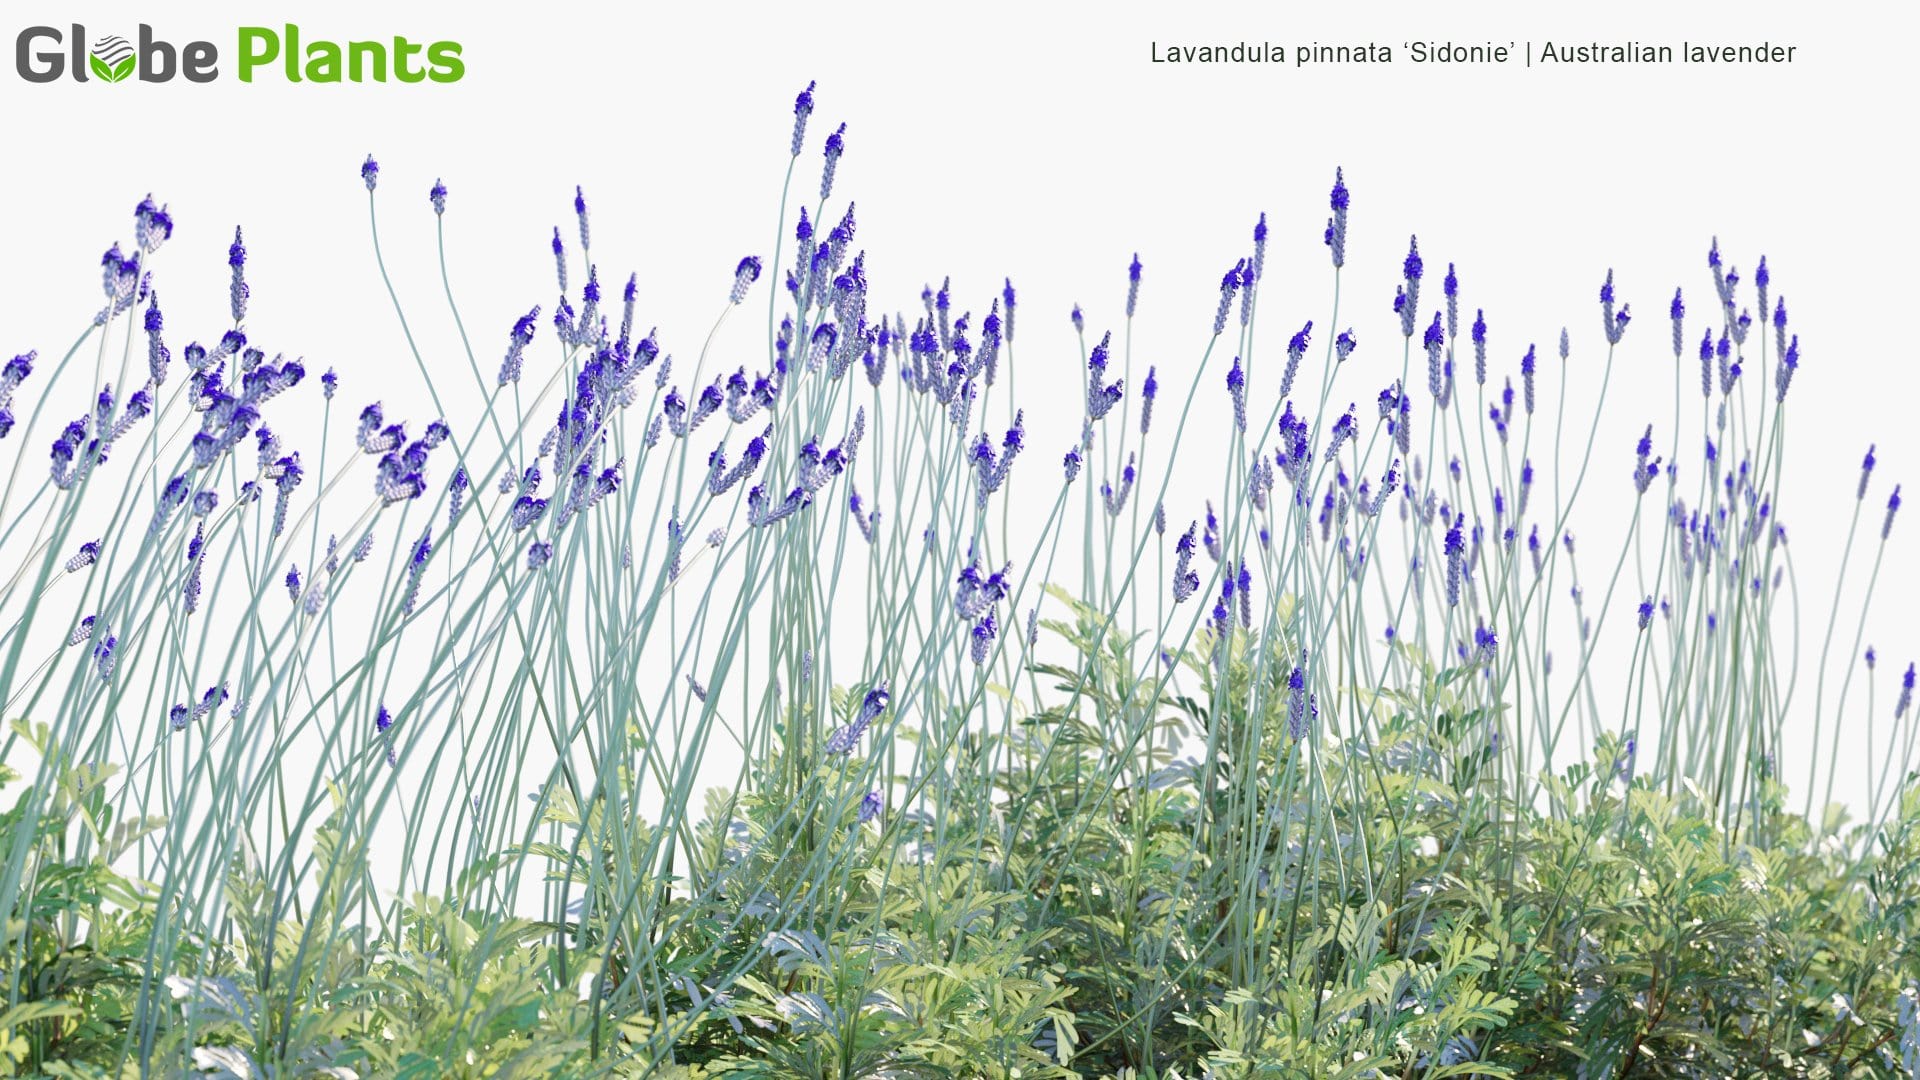 High Poly | Lavandula Model 3D \'Sidonie\' Pinnata Lavender) (Australian